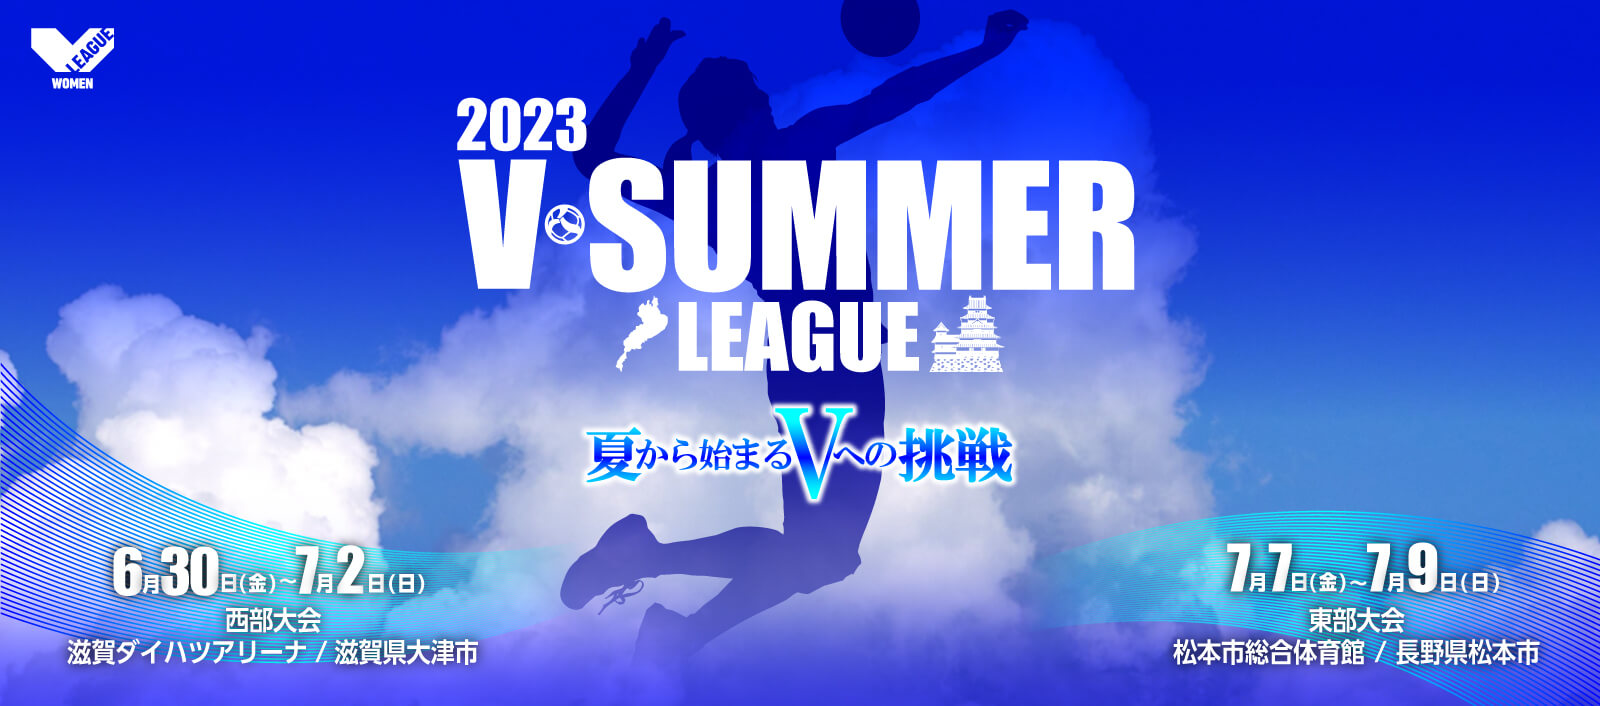 2023 V・サマーリーグ女子 | NEWS | バレーボール Vリーグ